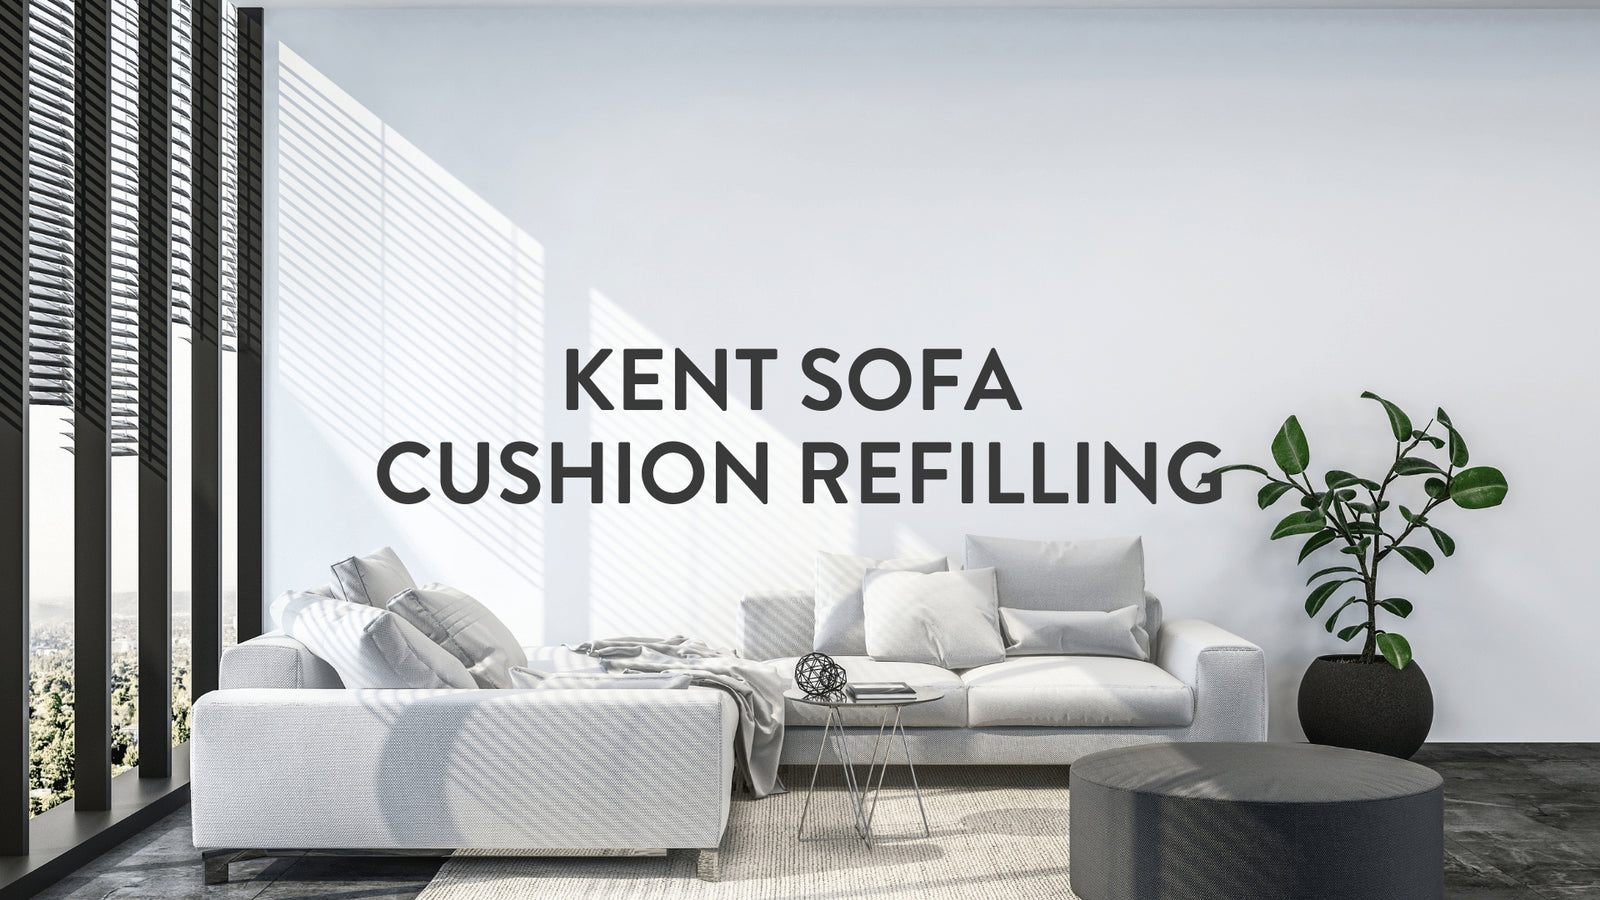 Kent sofa cushion refilling service saggy new foam firm 